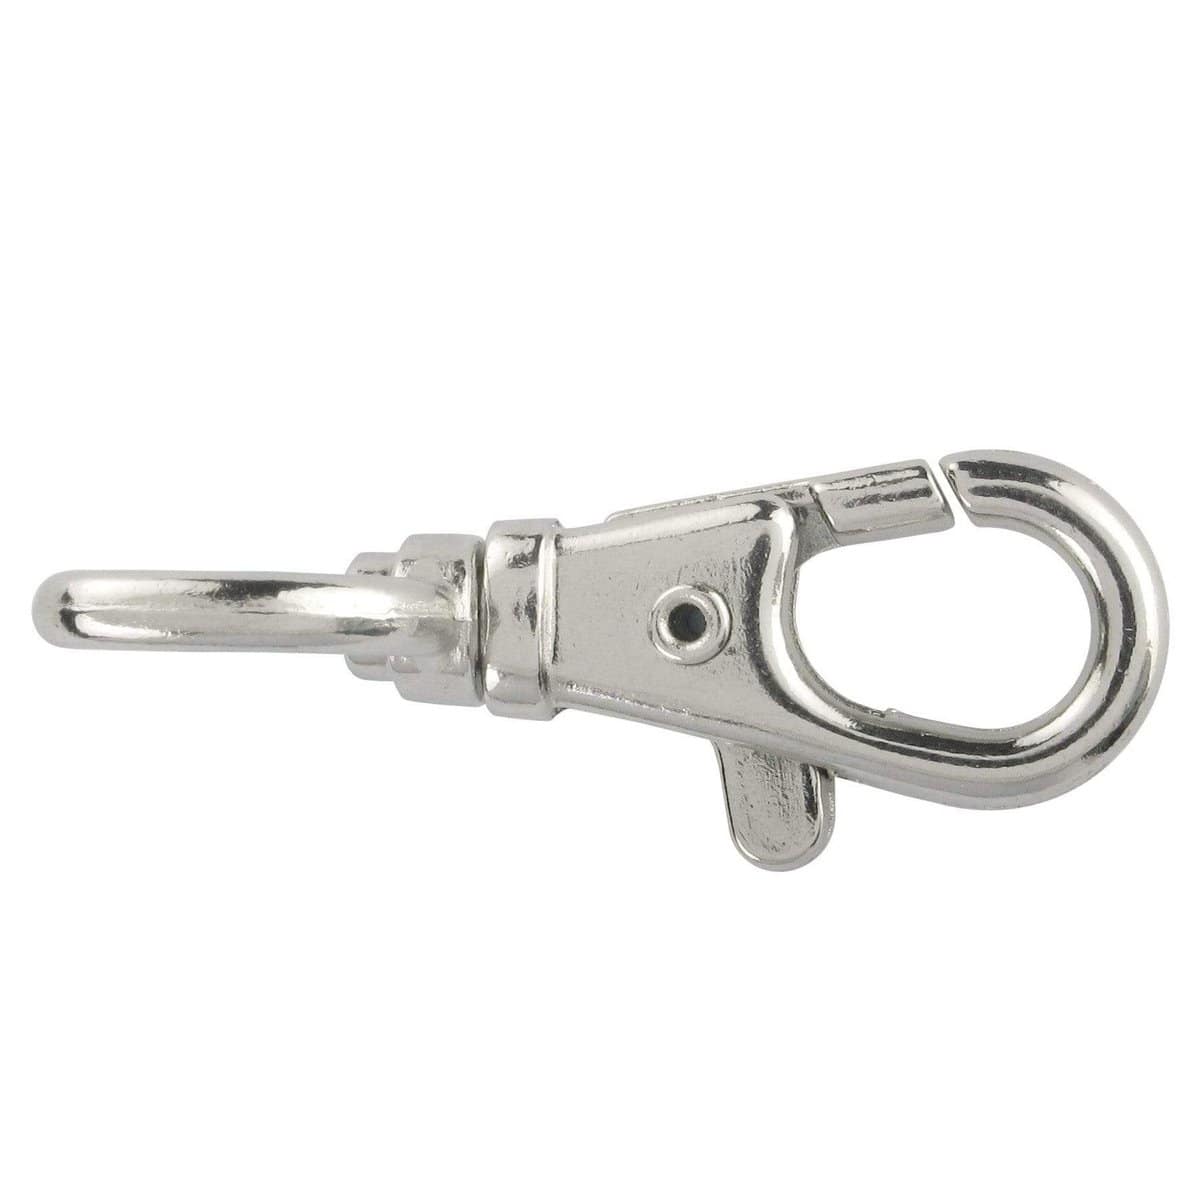 4x Swivel Lobster Claw Clasp Keychain Hooks Lanyard for Keys